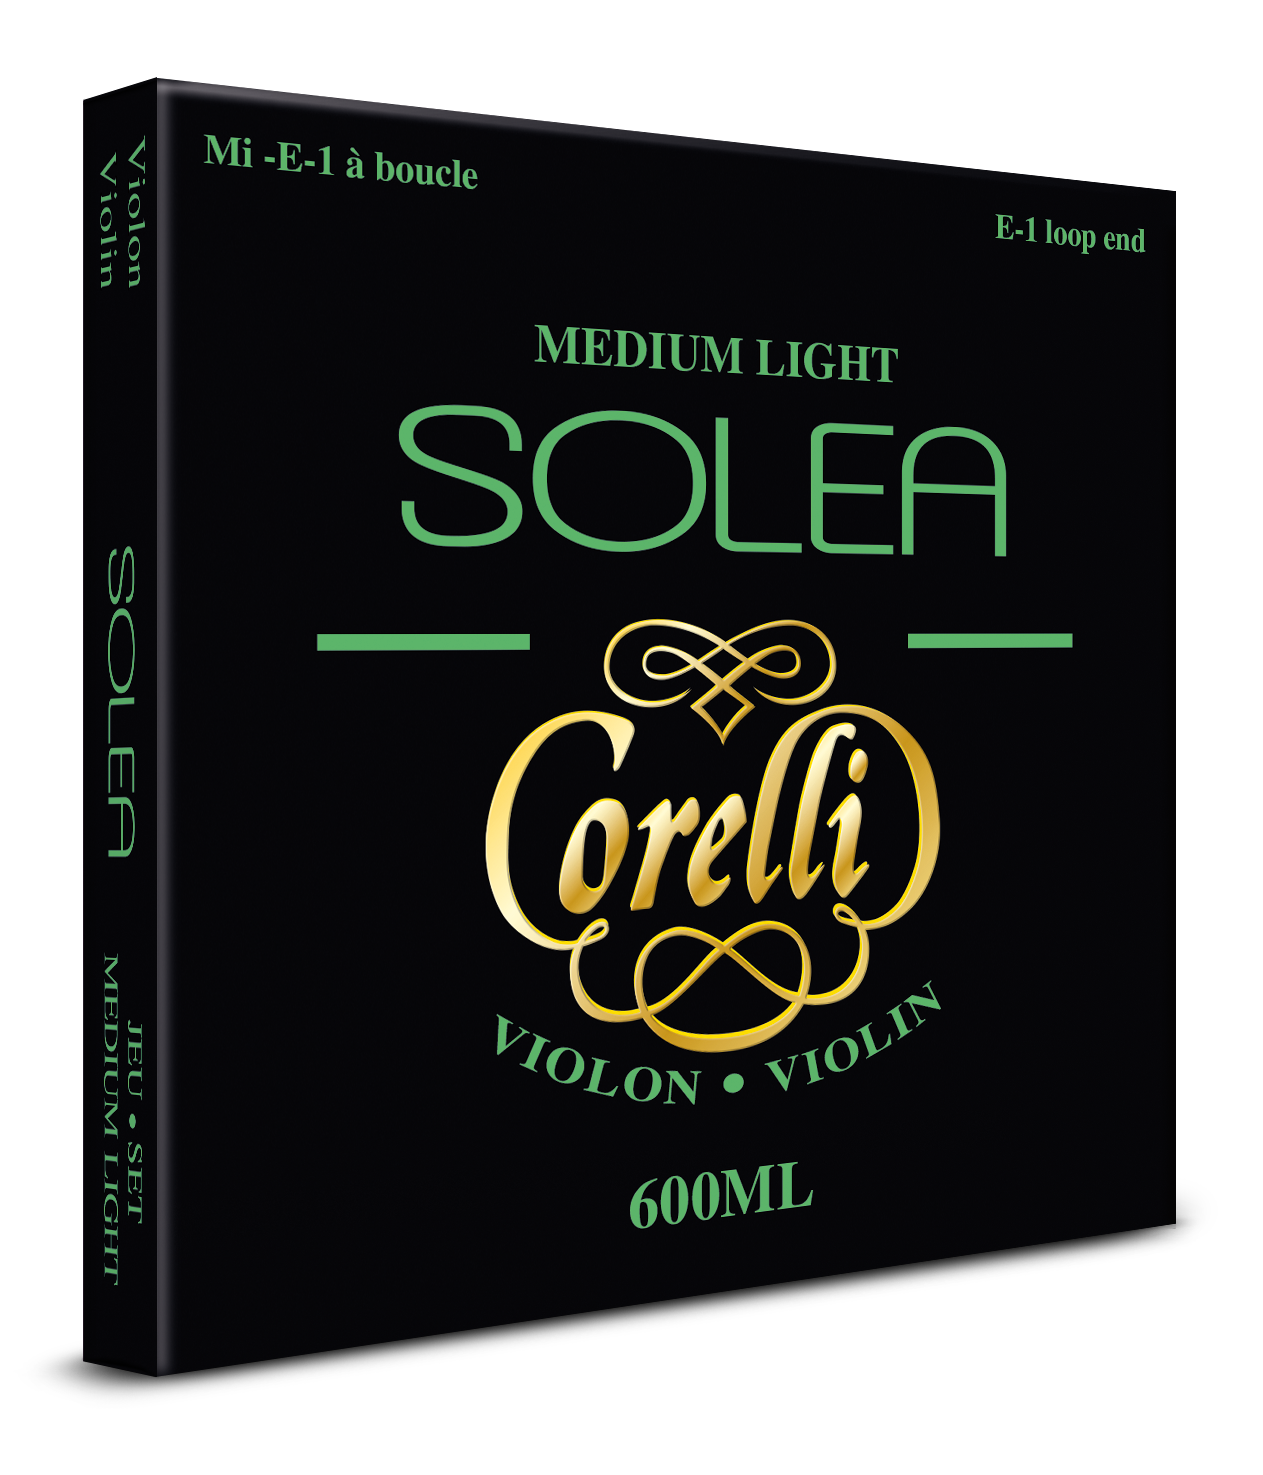 Corelli Solea medium light Loop end